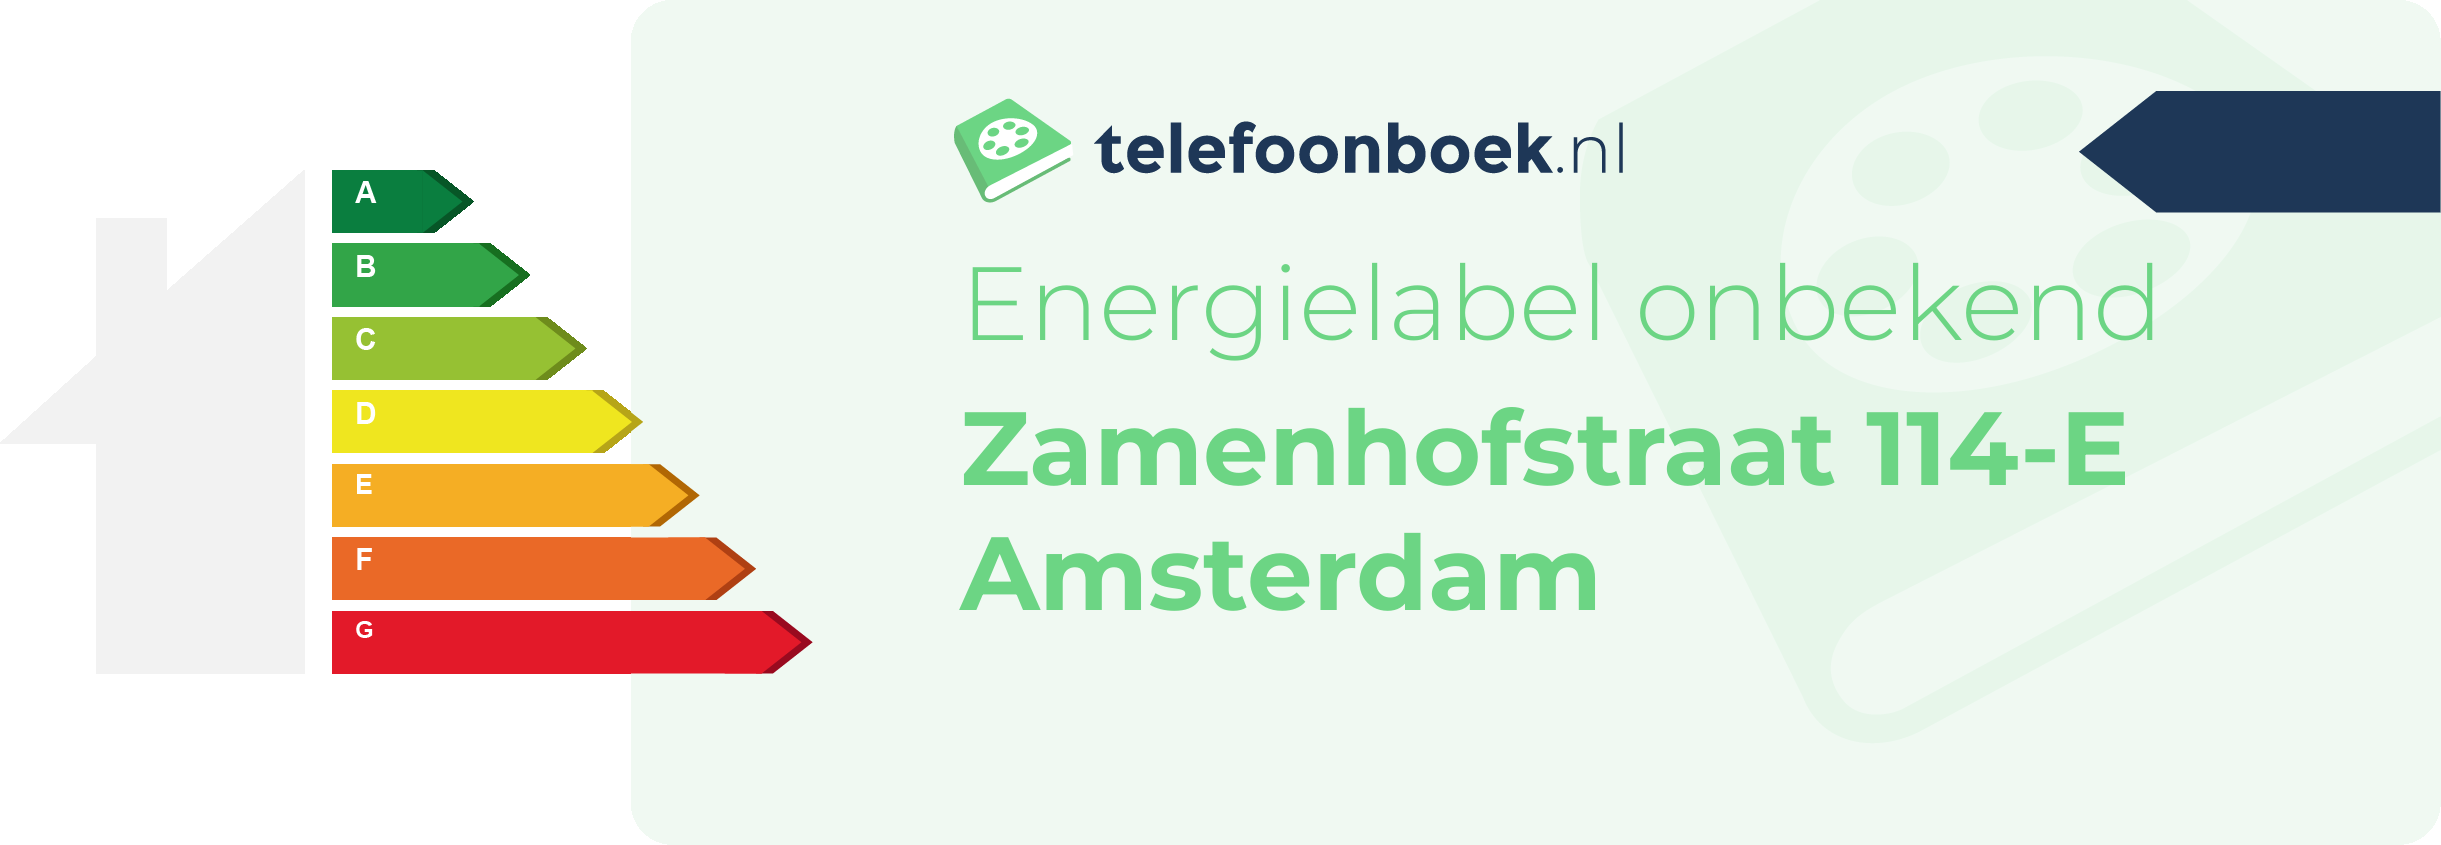 Energielabel Zamenhofstraat 114-E Amsterdam